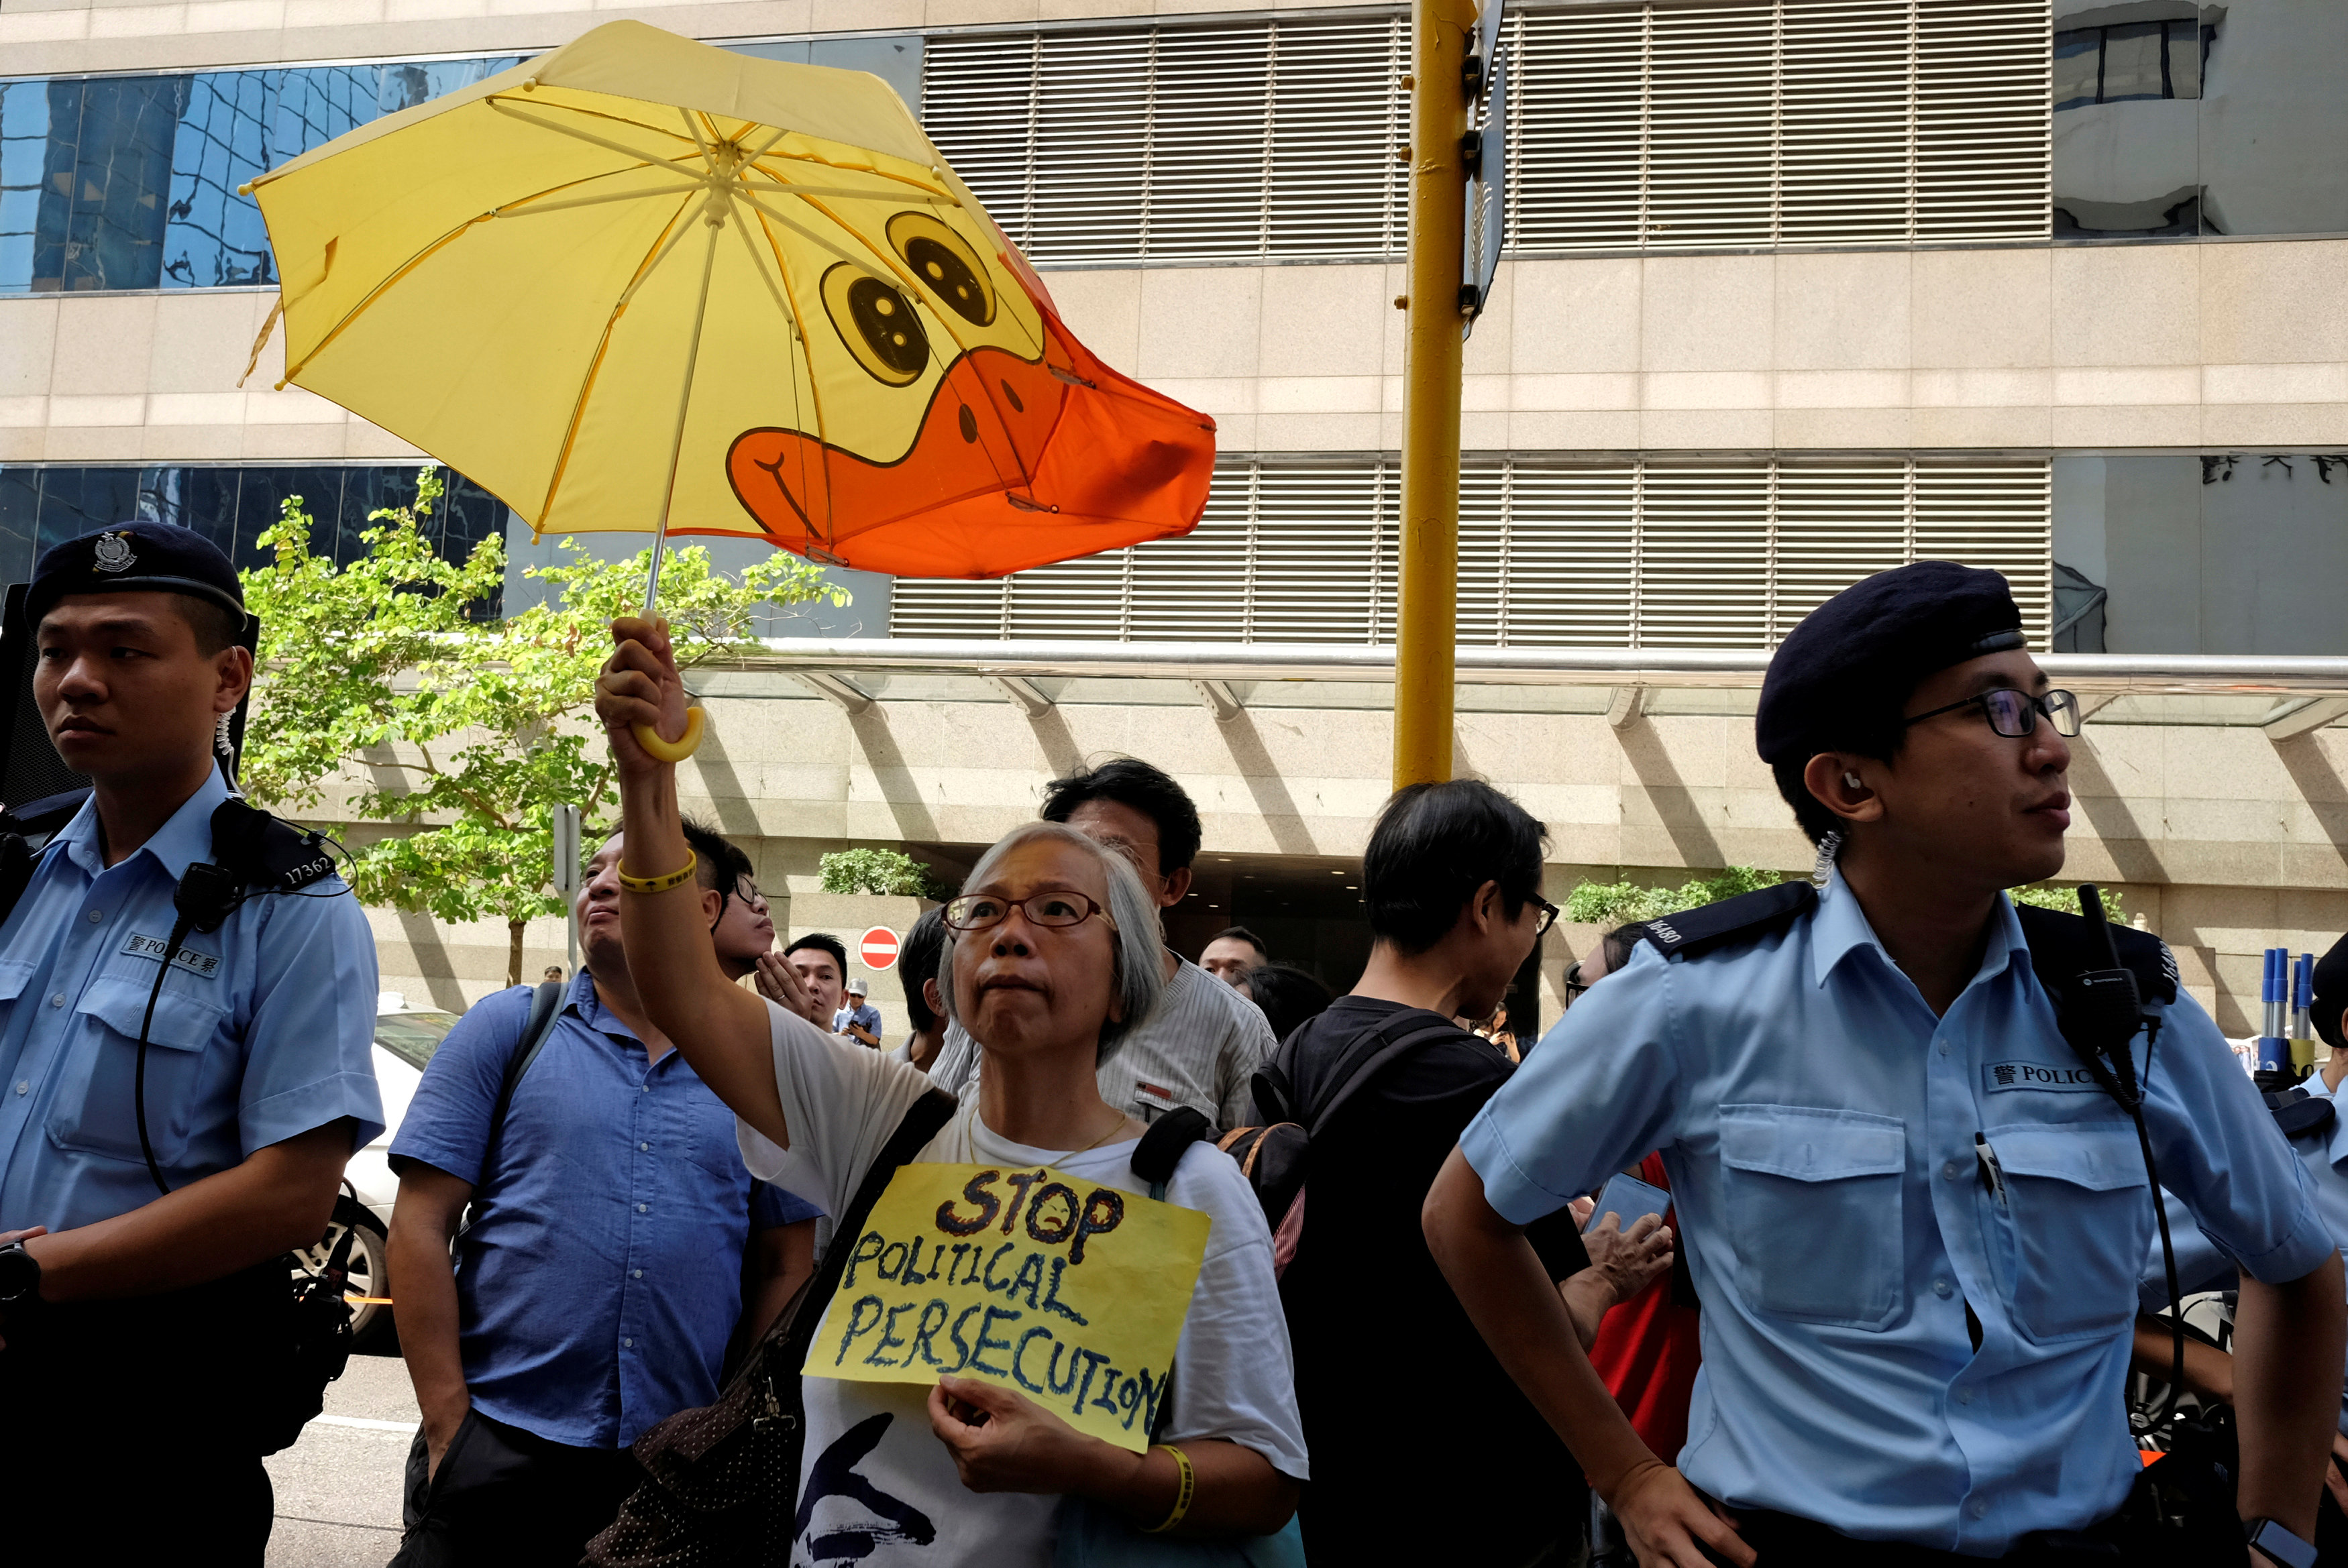 Hong Kong leader demands end of independence talk, warns ties with China at risk